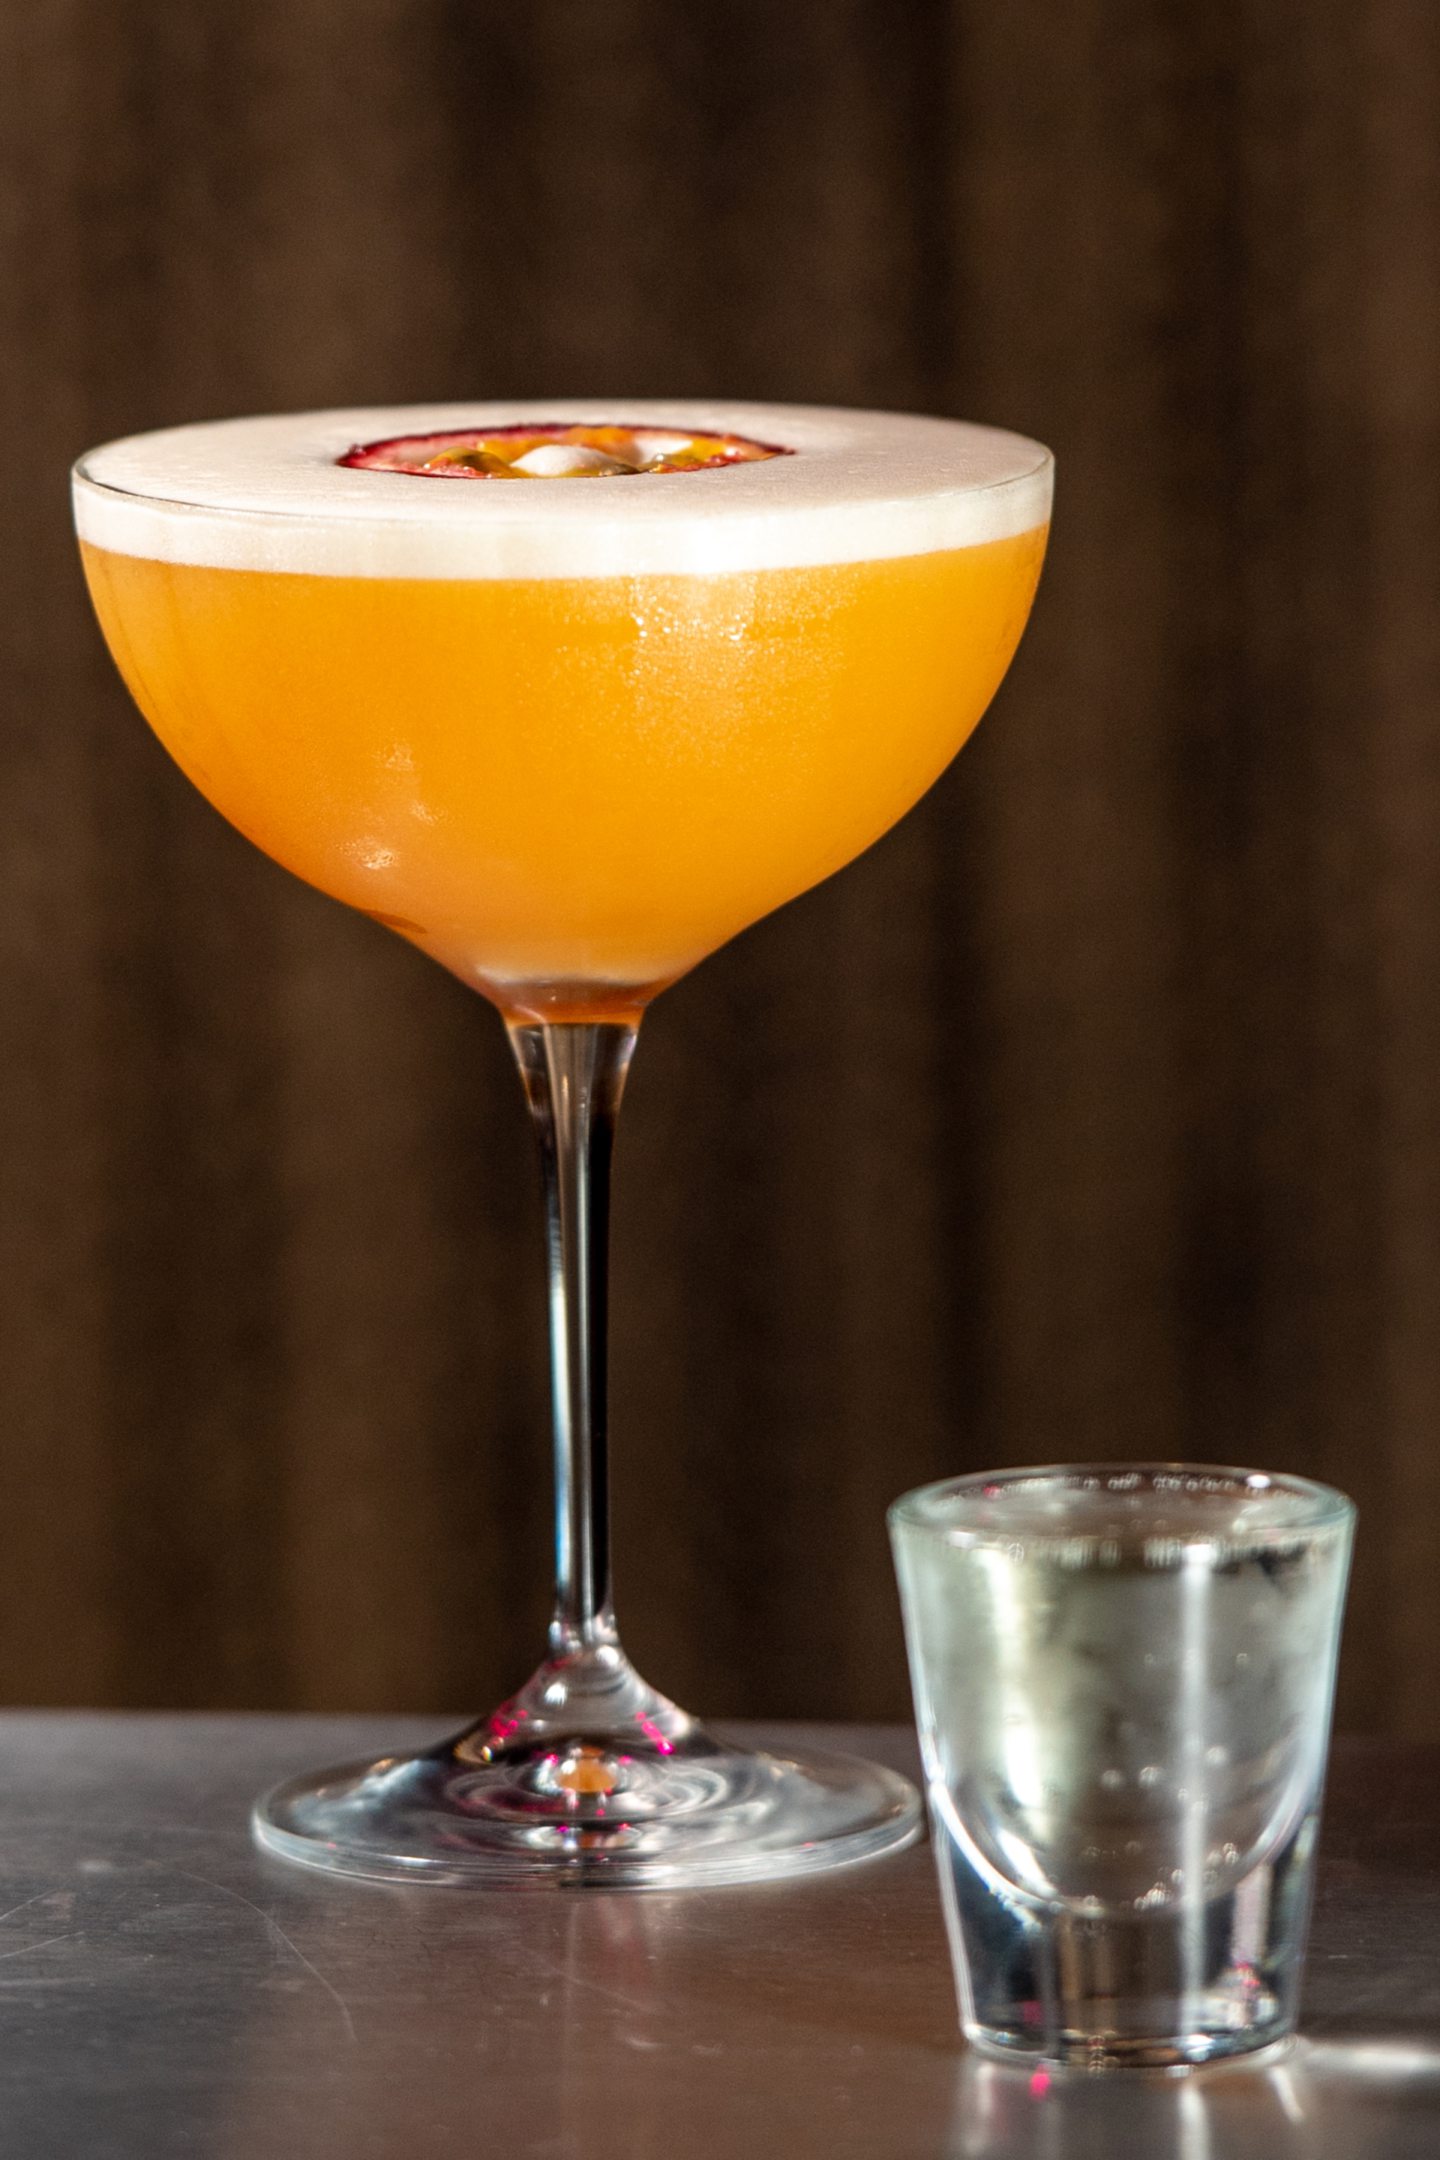 The pornstar Martini cocktail.